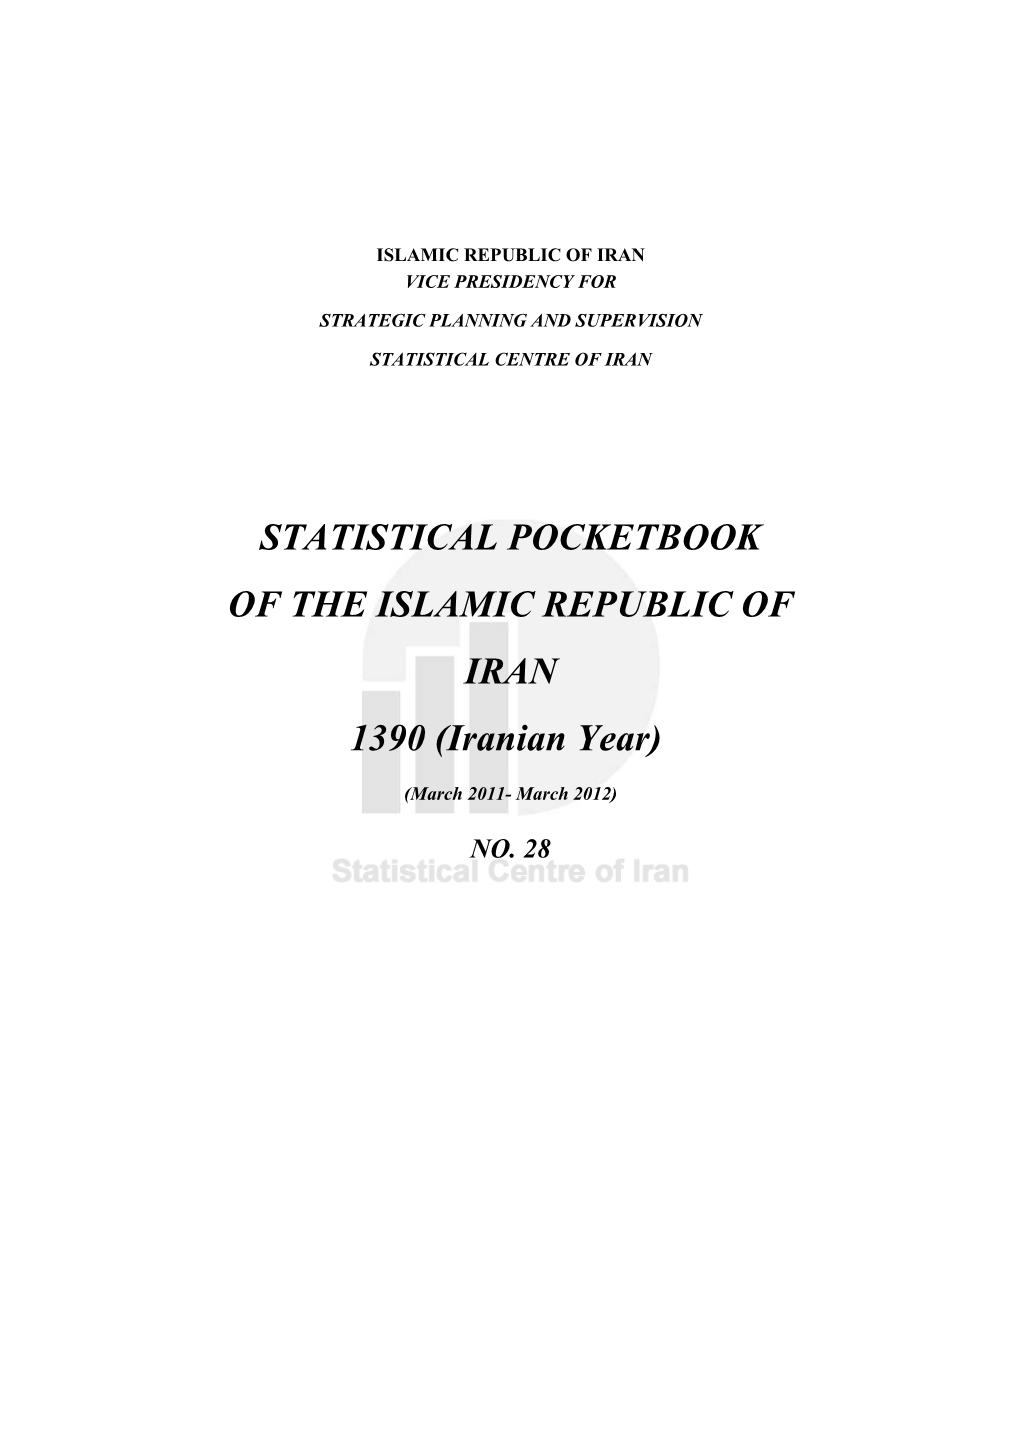 STATISTICAL POCKETBOOK of the ISLAMIC REPUBLIC of IRAN 1390 (Iranian Year)